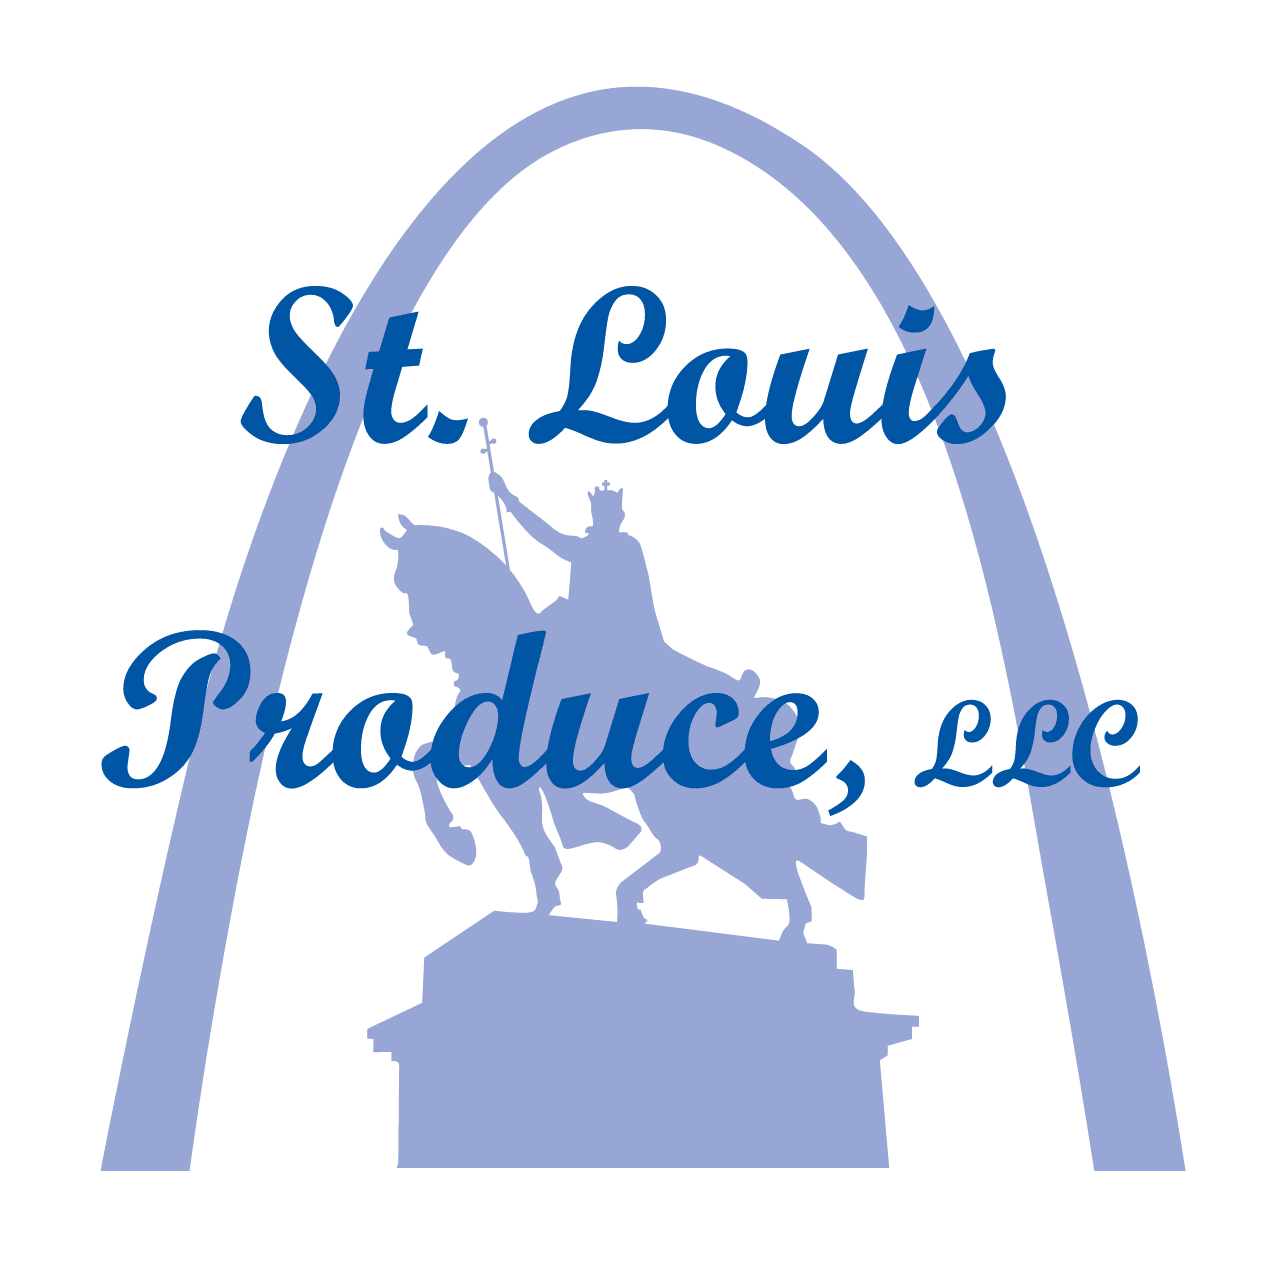 St. Louis Produce, LLC